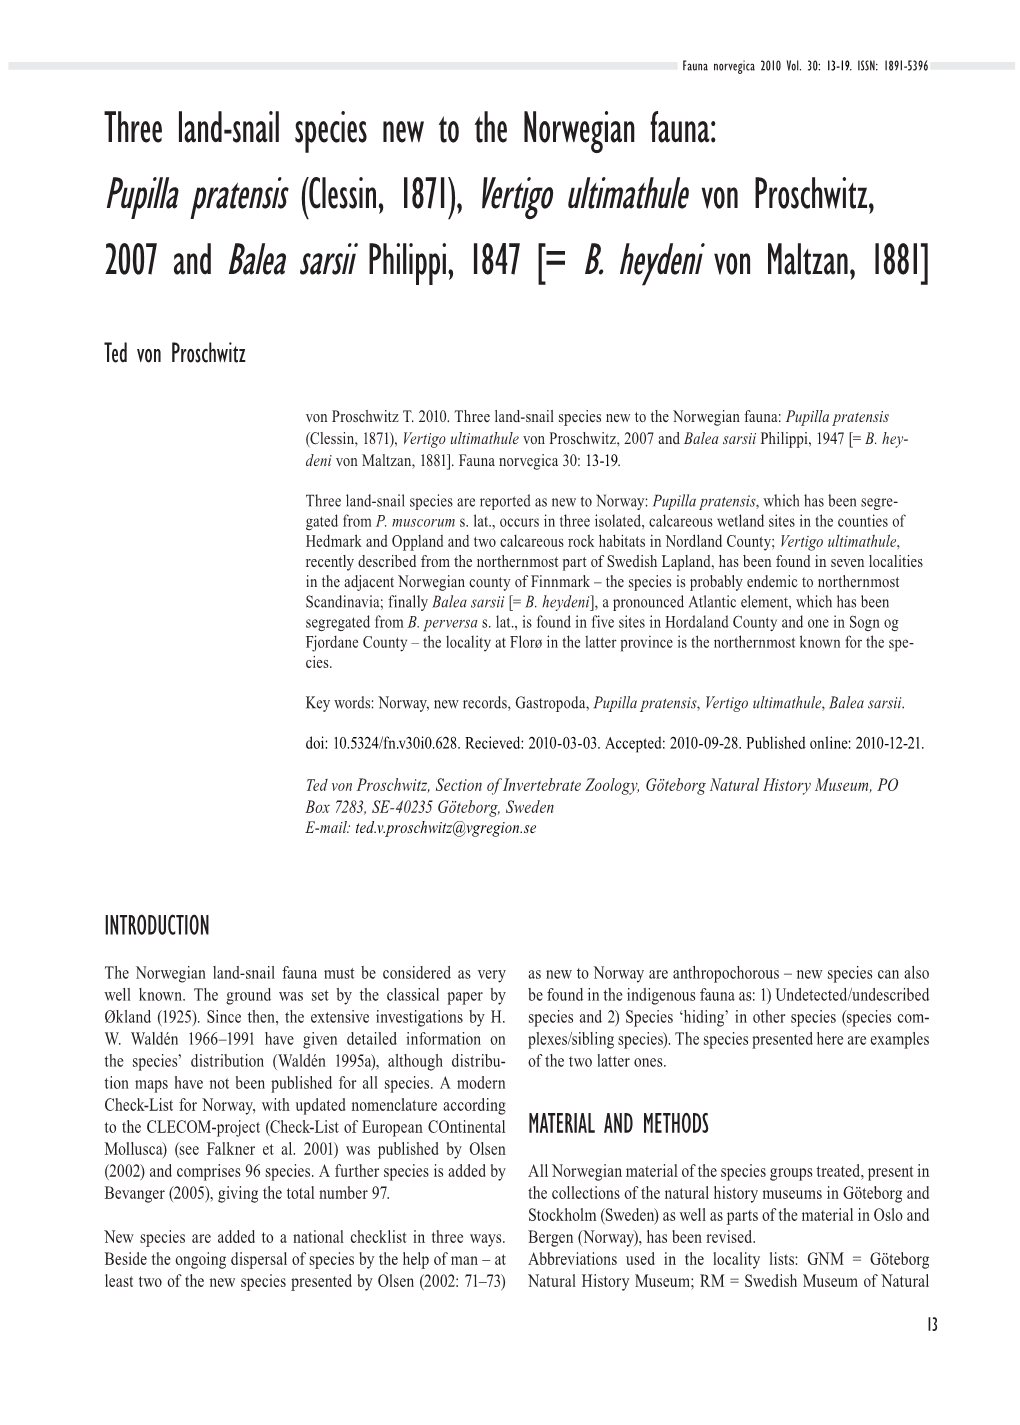 Pupilla Pratensis (Clessin, 1871), Vertigo Ultimathule Von Proschwitz, 2007 and Balea Sarsii Philippi, 1847 [= B